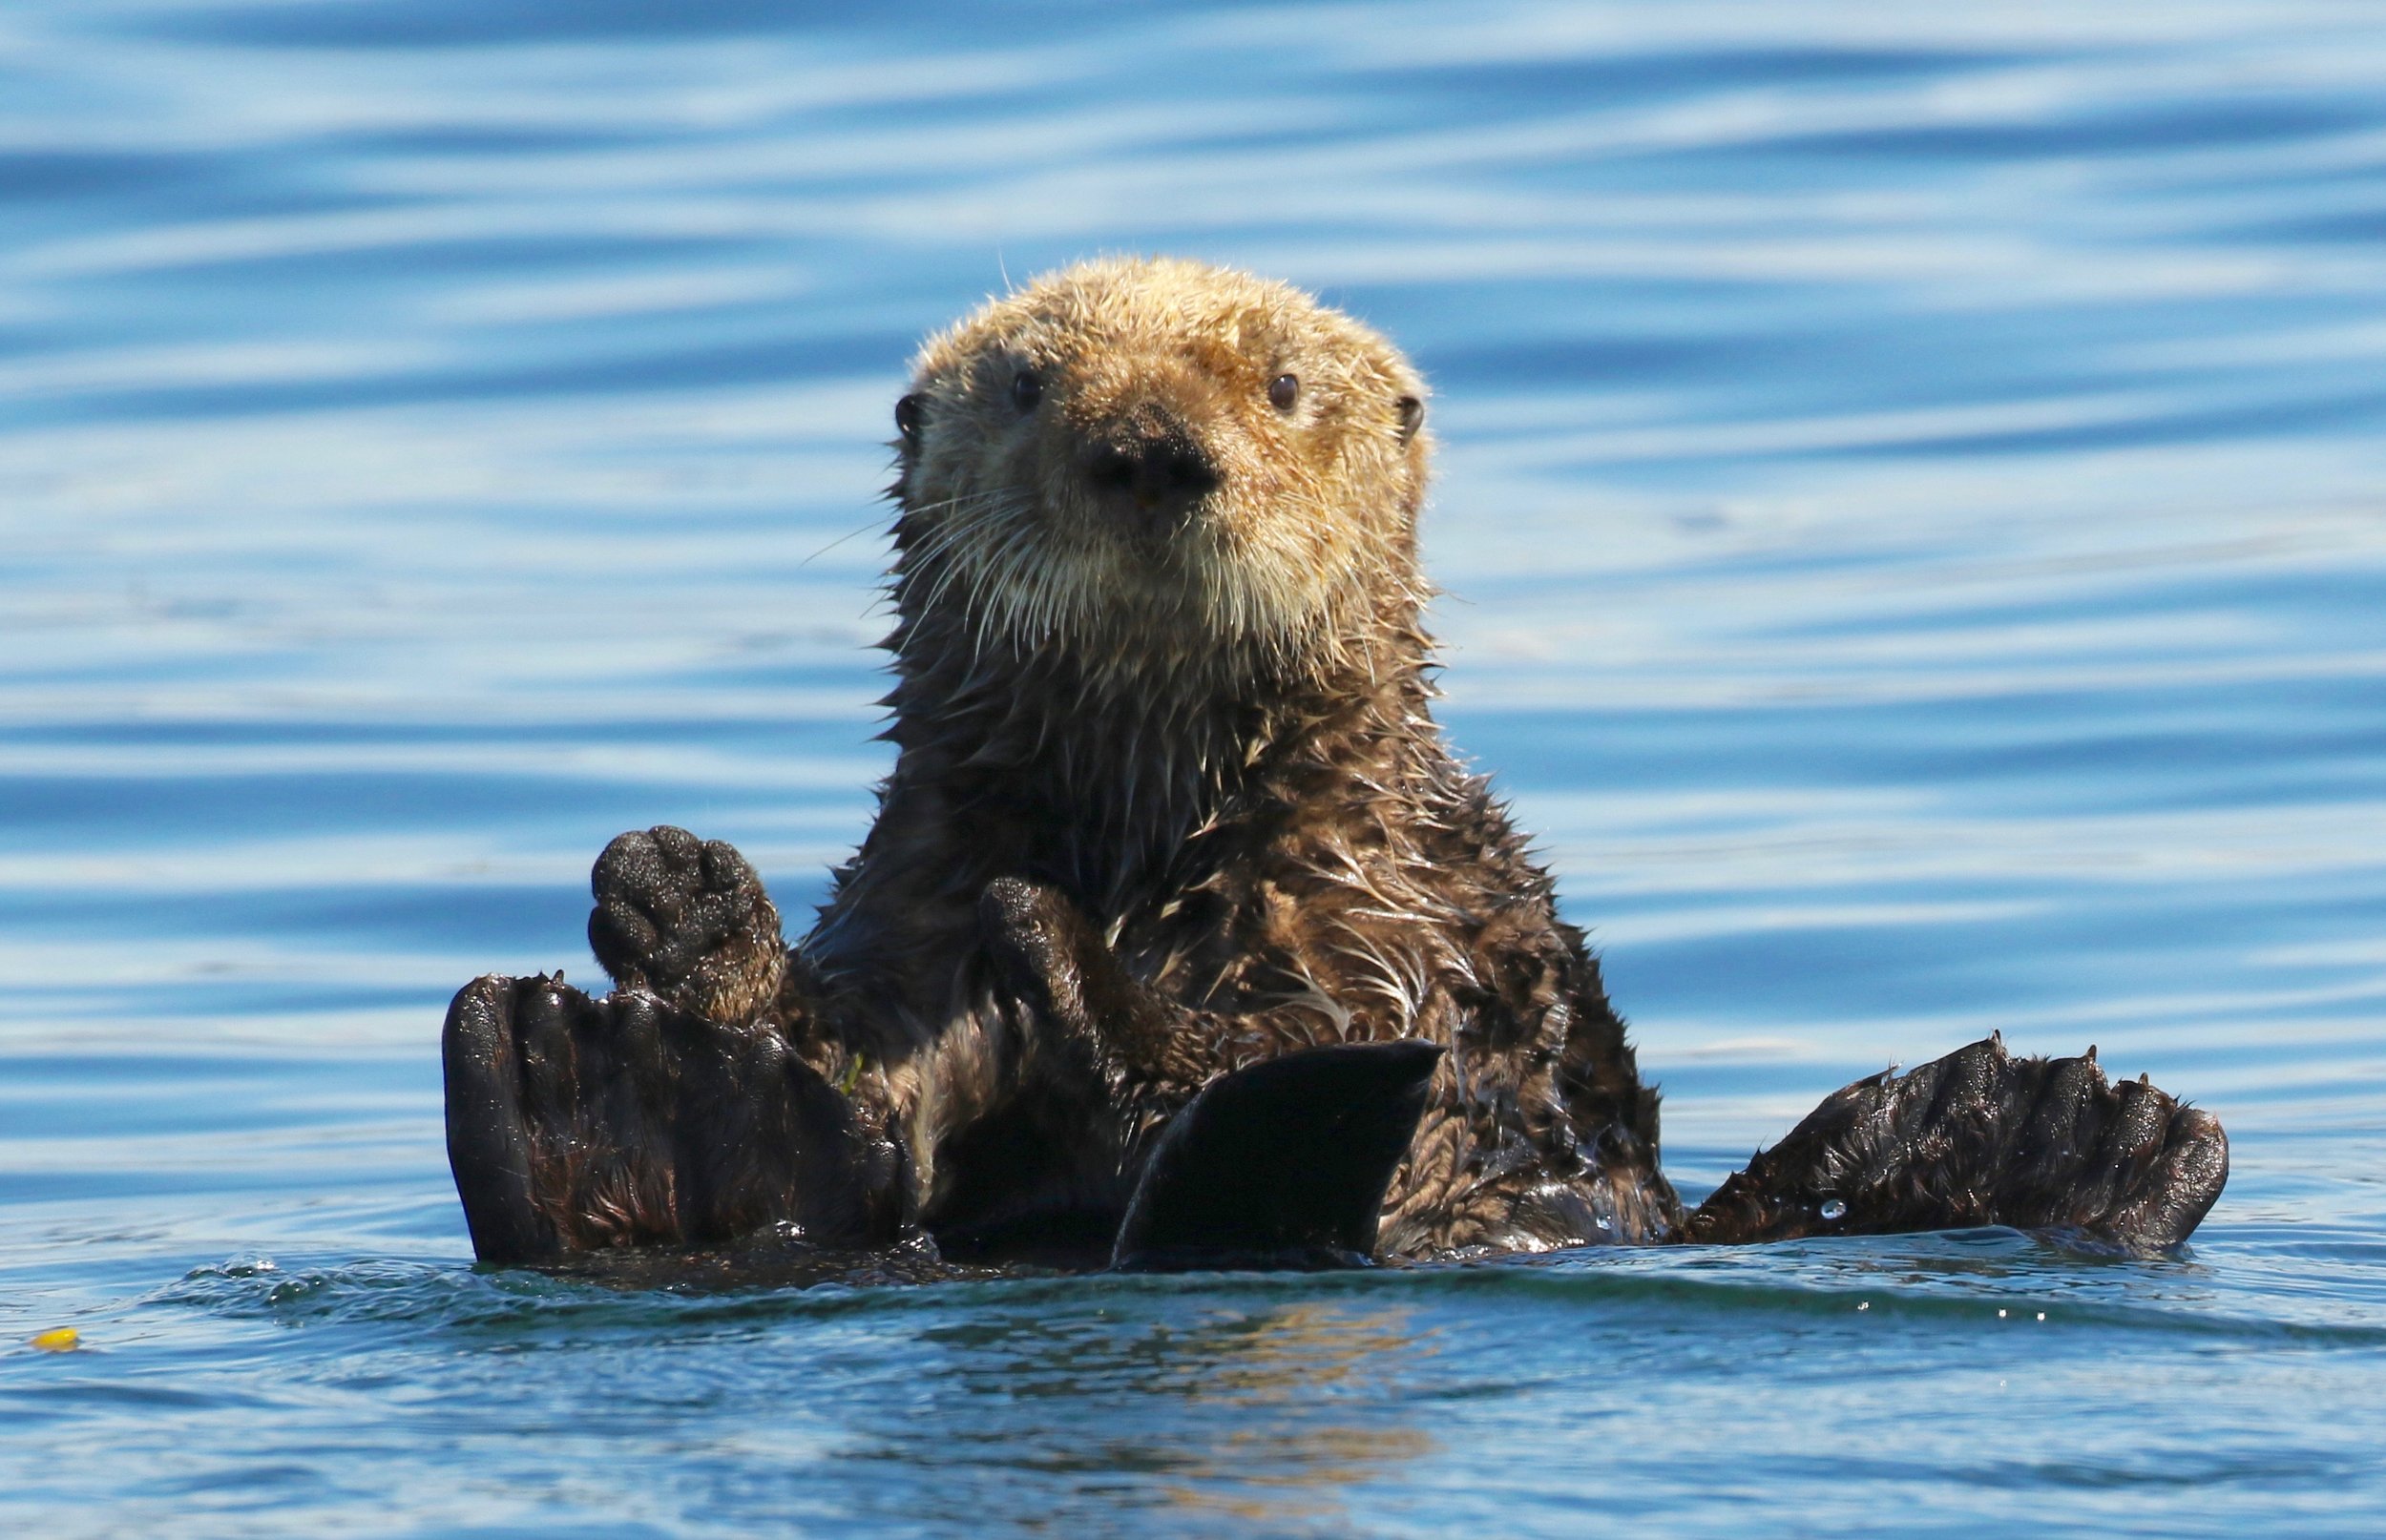 Northern sea otter Kachemak Bay Alaska, photo by Marc Webber